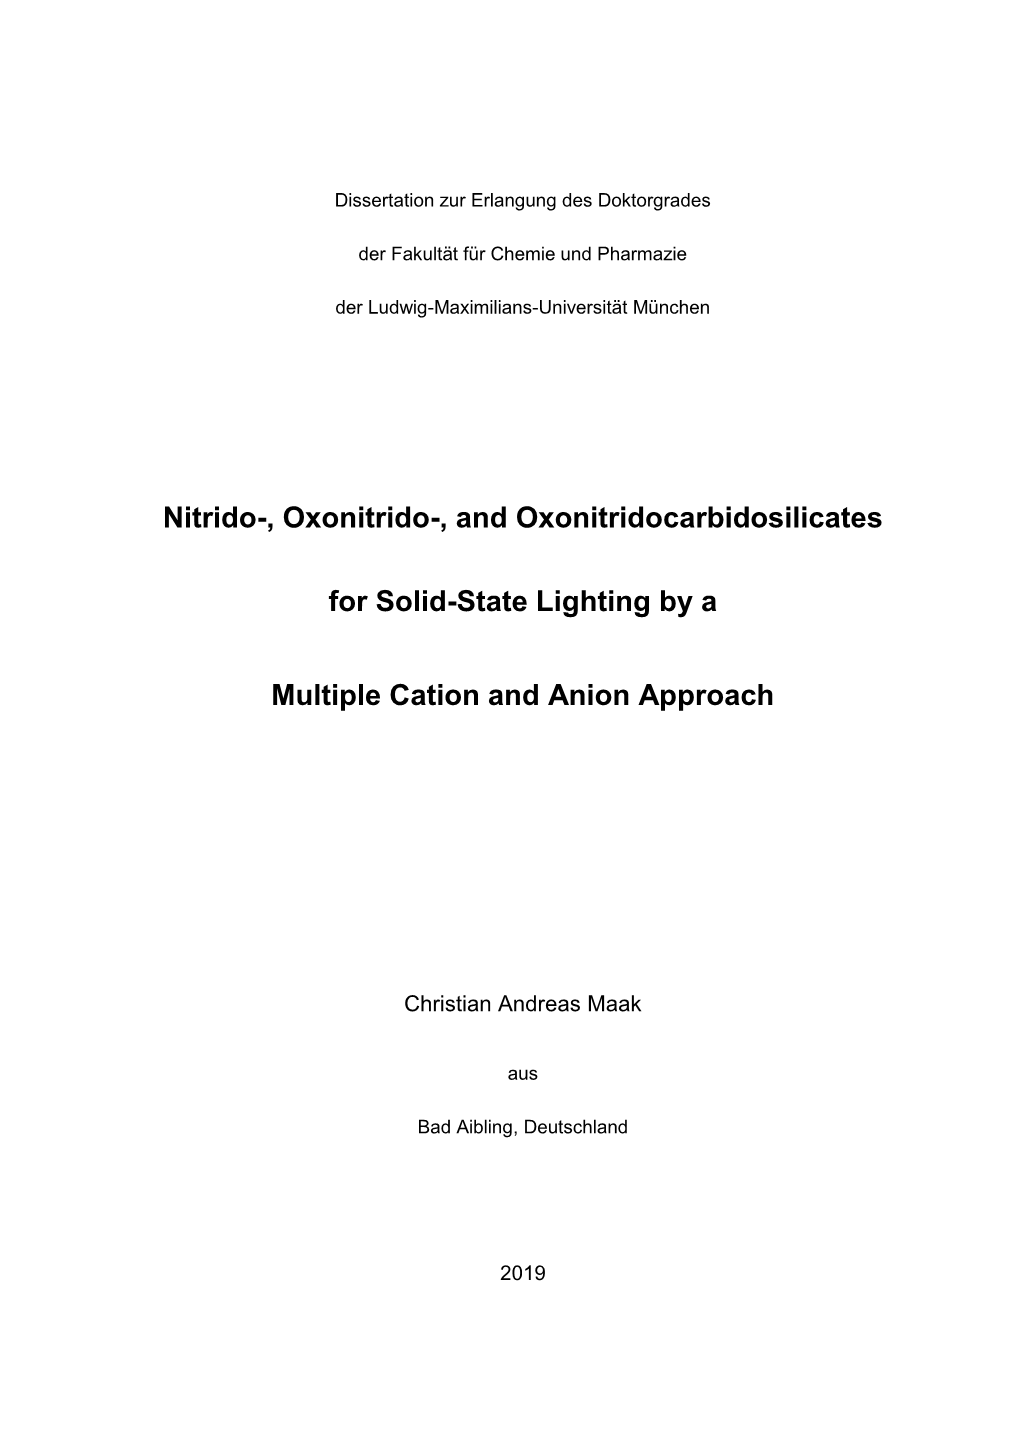 Nitrido-, Oxonitrido-, and Oxonitridocarbidosilicates for Solid